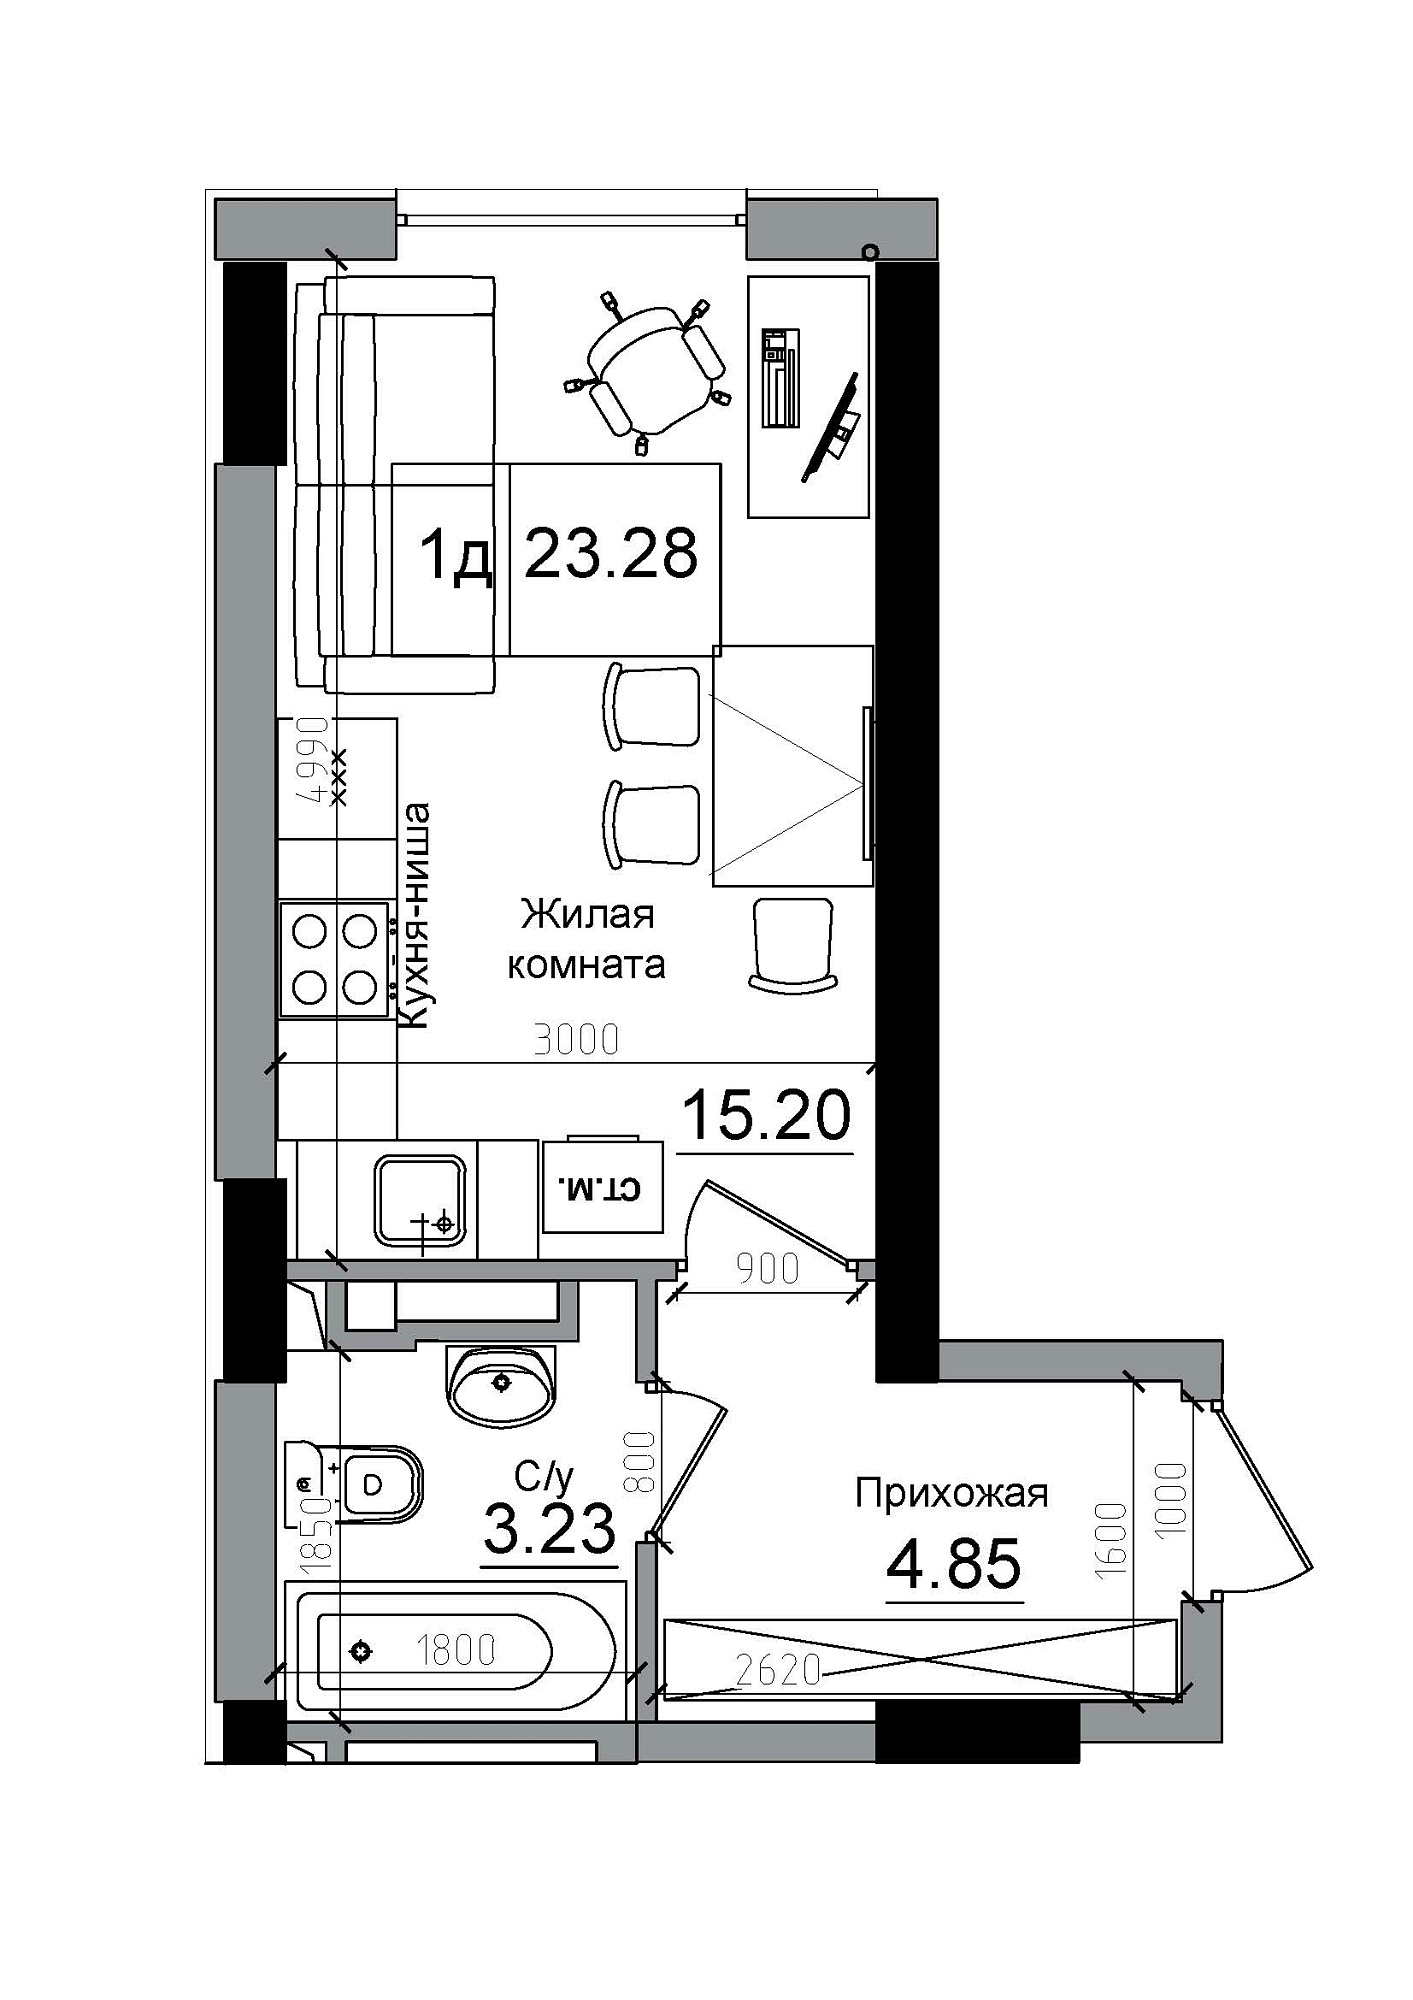 Planning Smart flats area 23.28m2, AB-12-01/00005.